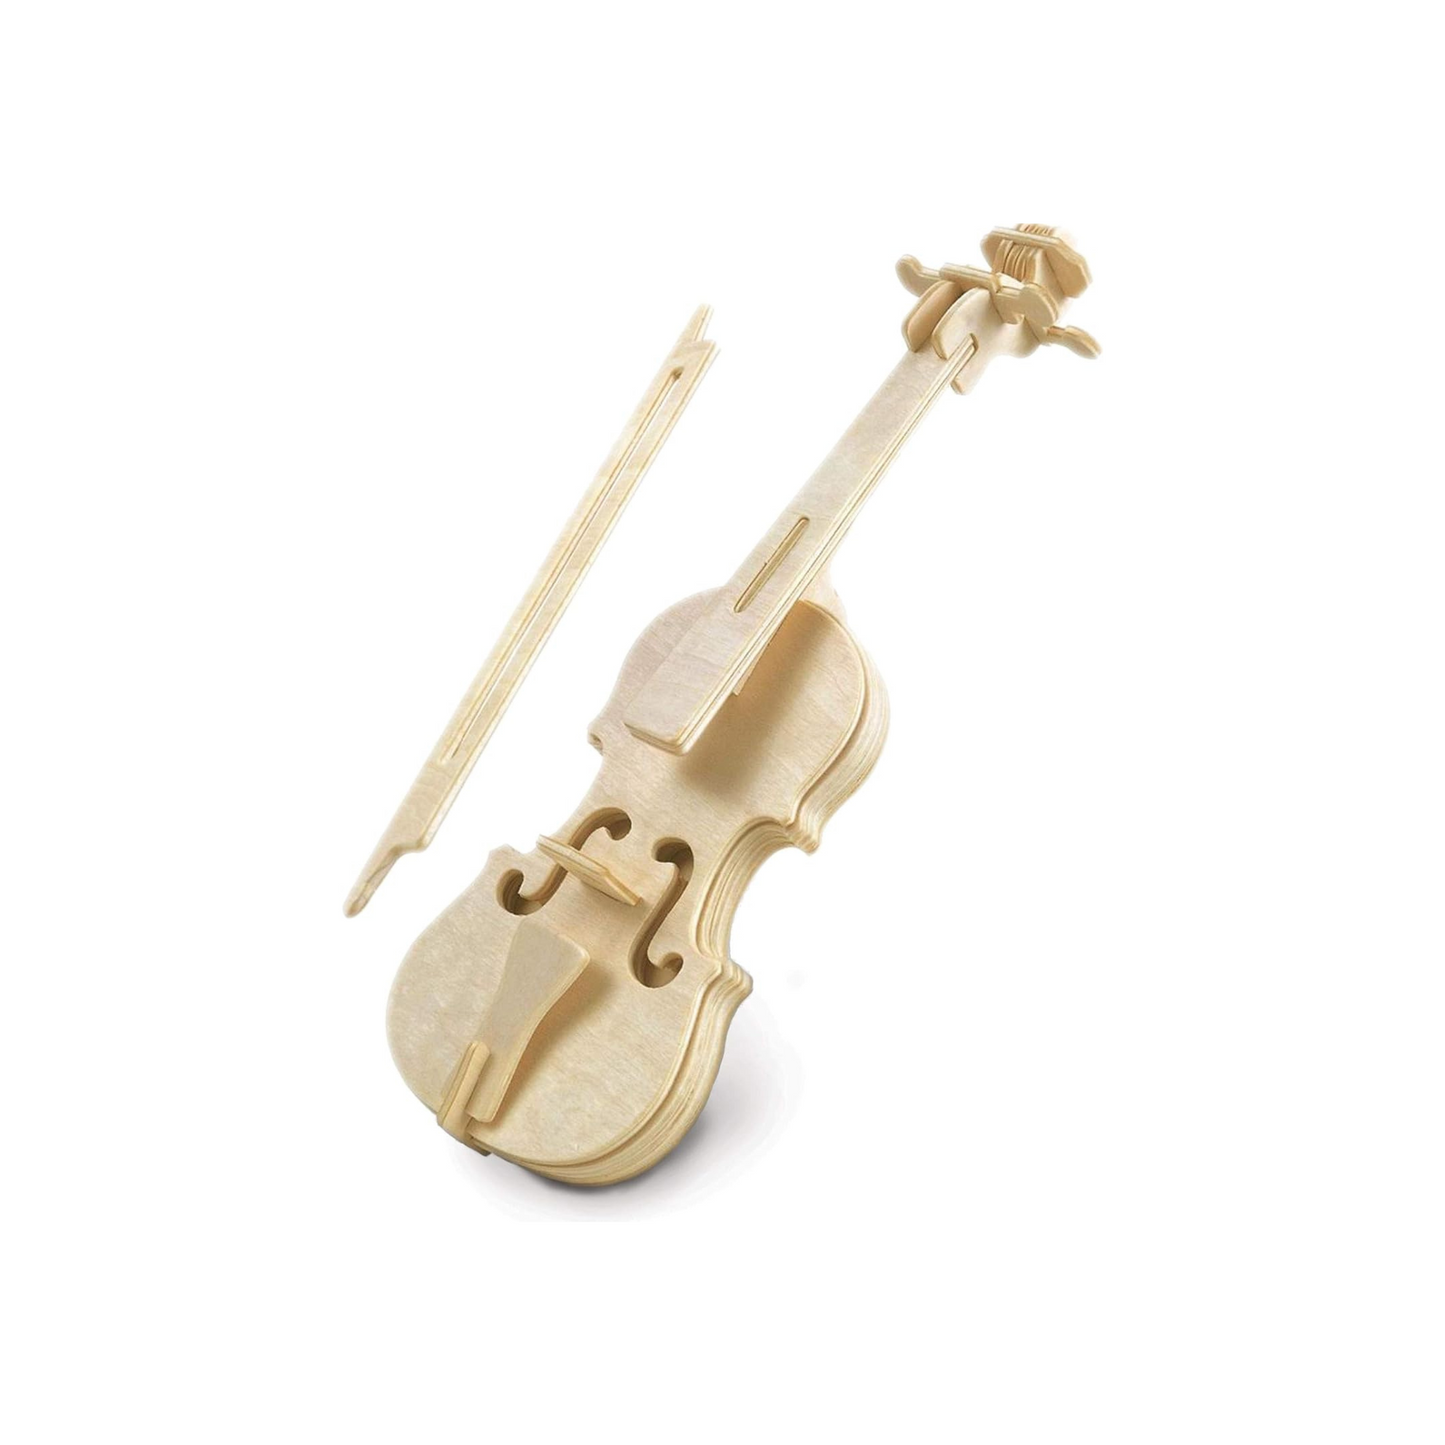 Quay Woodcraft Violin